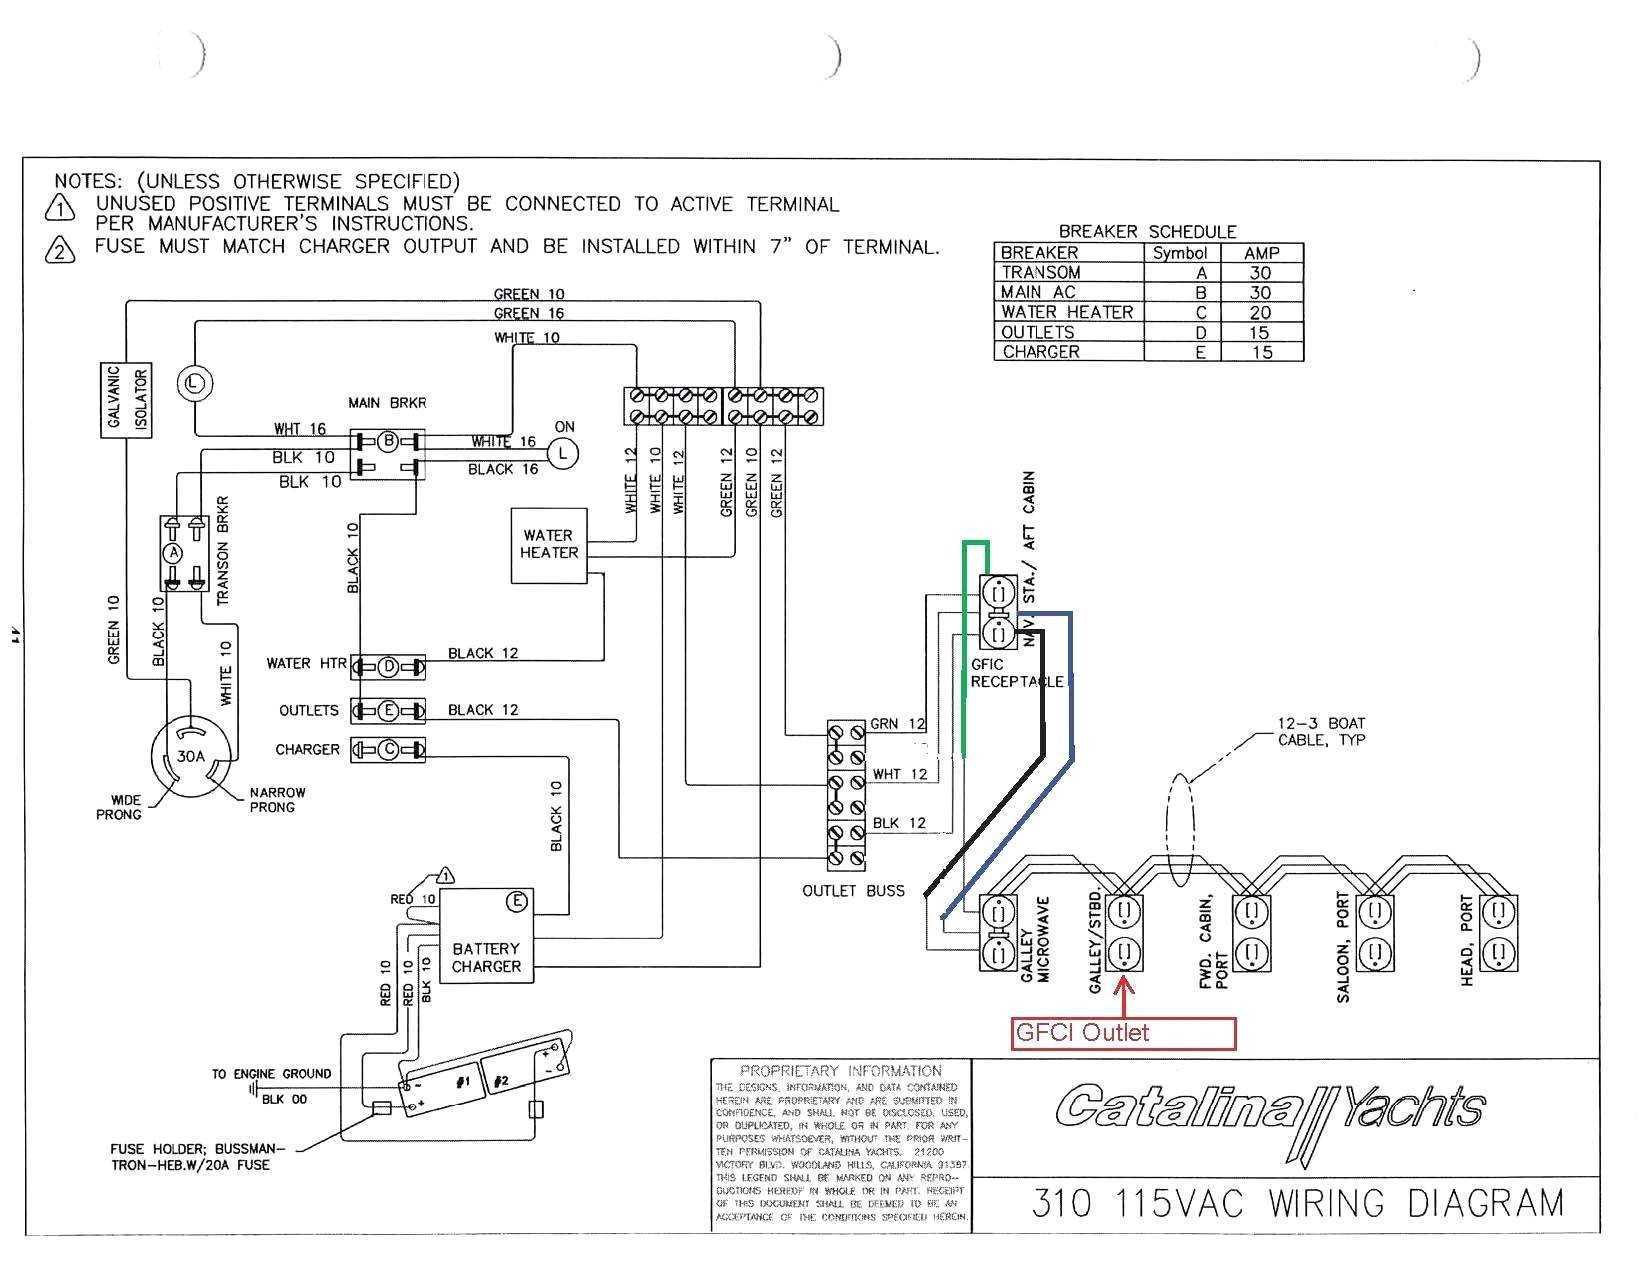 Shop Vac Switch Wiring Diagram Elegant Wiring Diagrams for A Shop Wiring Diagrams Schematics New